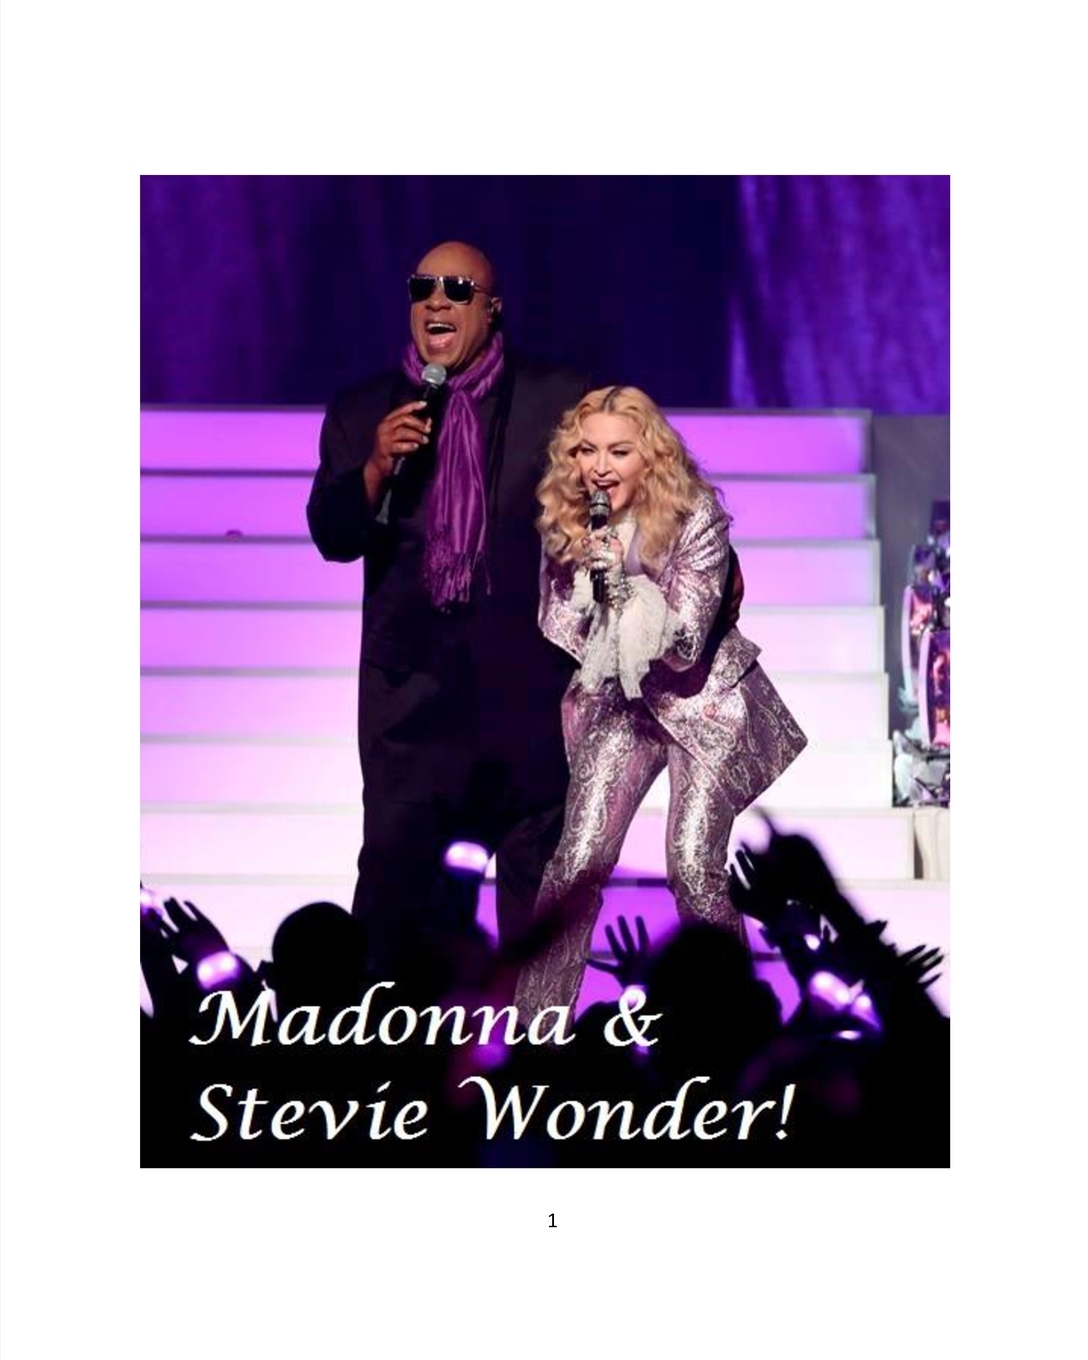 Madonna and Stevie Wonder! - image 1 of 1